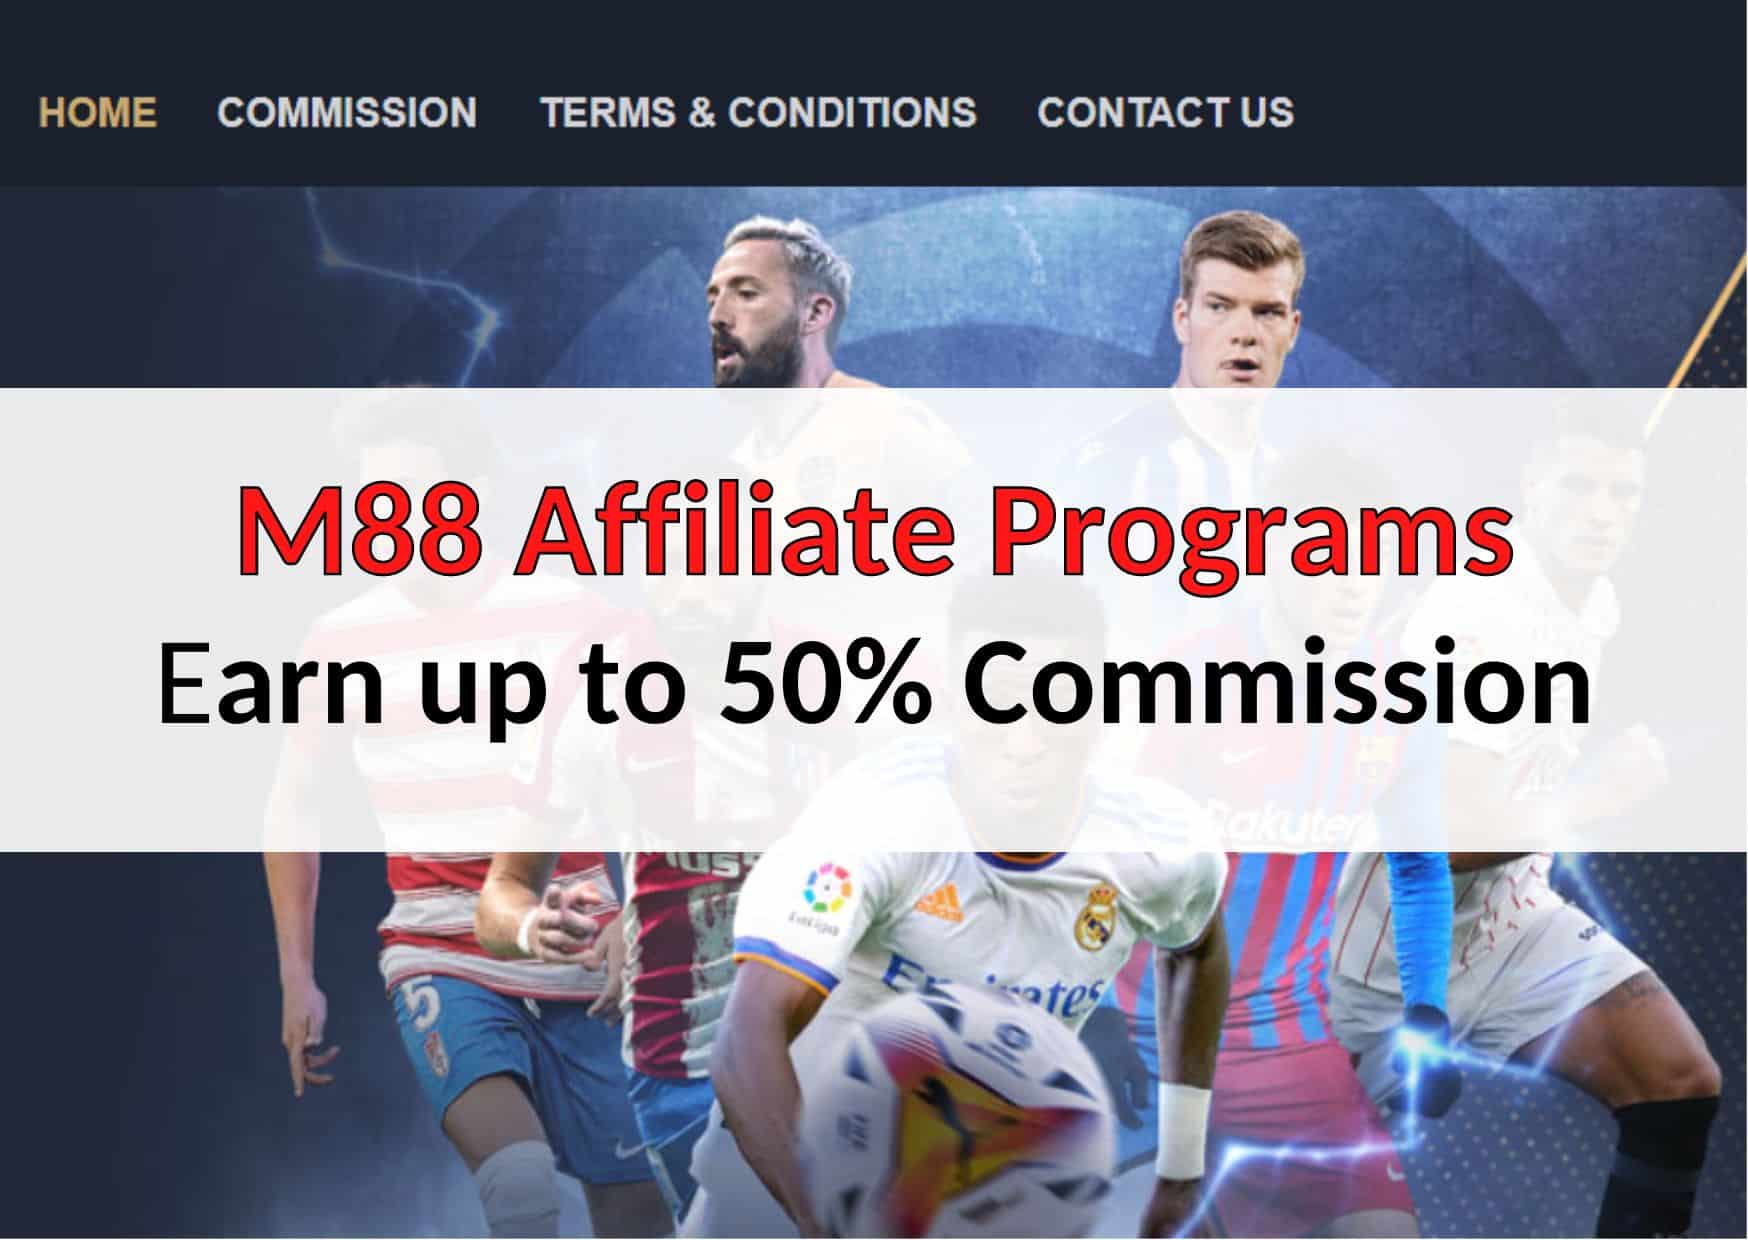 m88 mansion betting gambling site affiliate program 50 commission